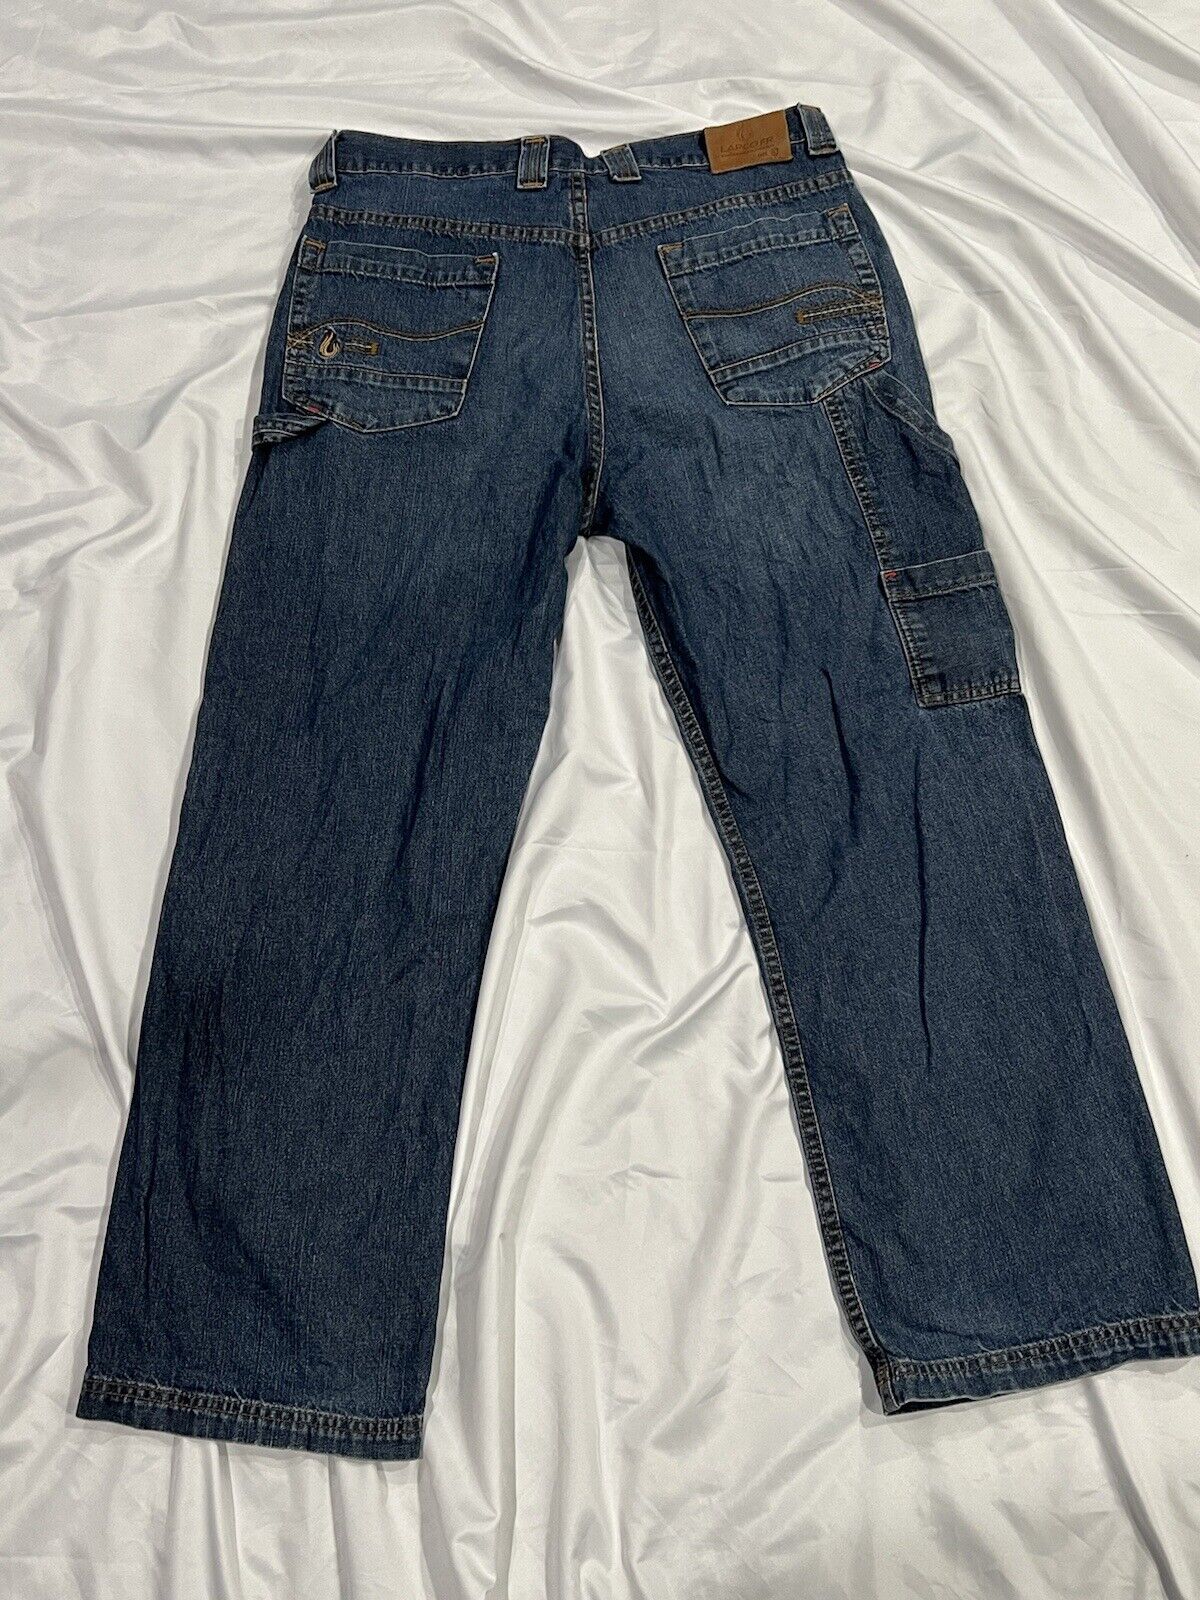 LAPCO FR Mens Jeans 34X30 Flame Resistant Style P… - image 4